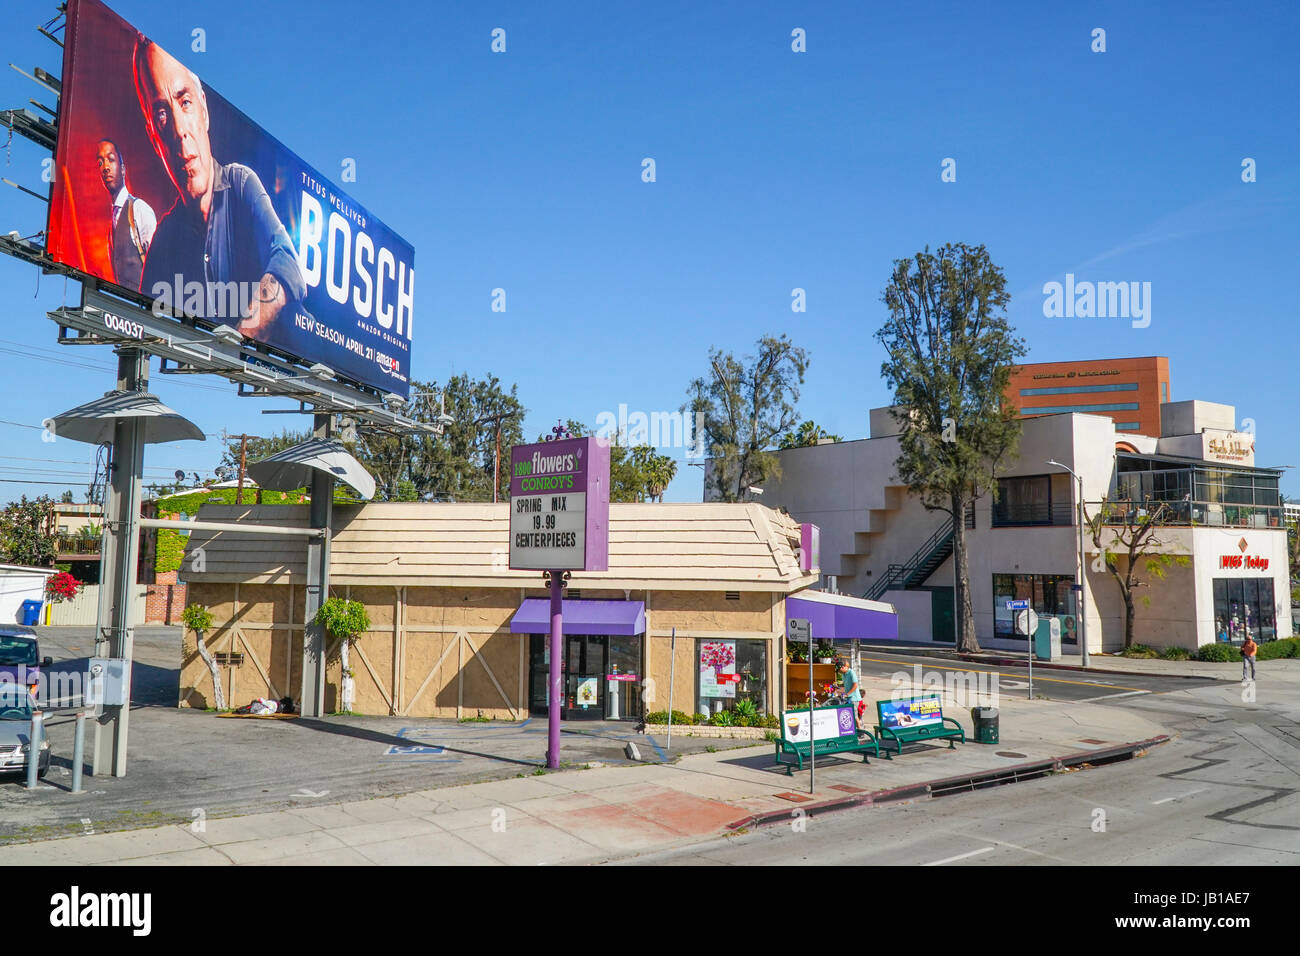 Typical street corner in Los Angeles - LOS ANGELES - CALIFORNIA Stock Photo